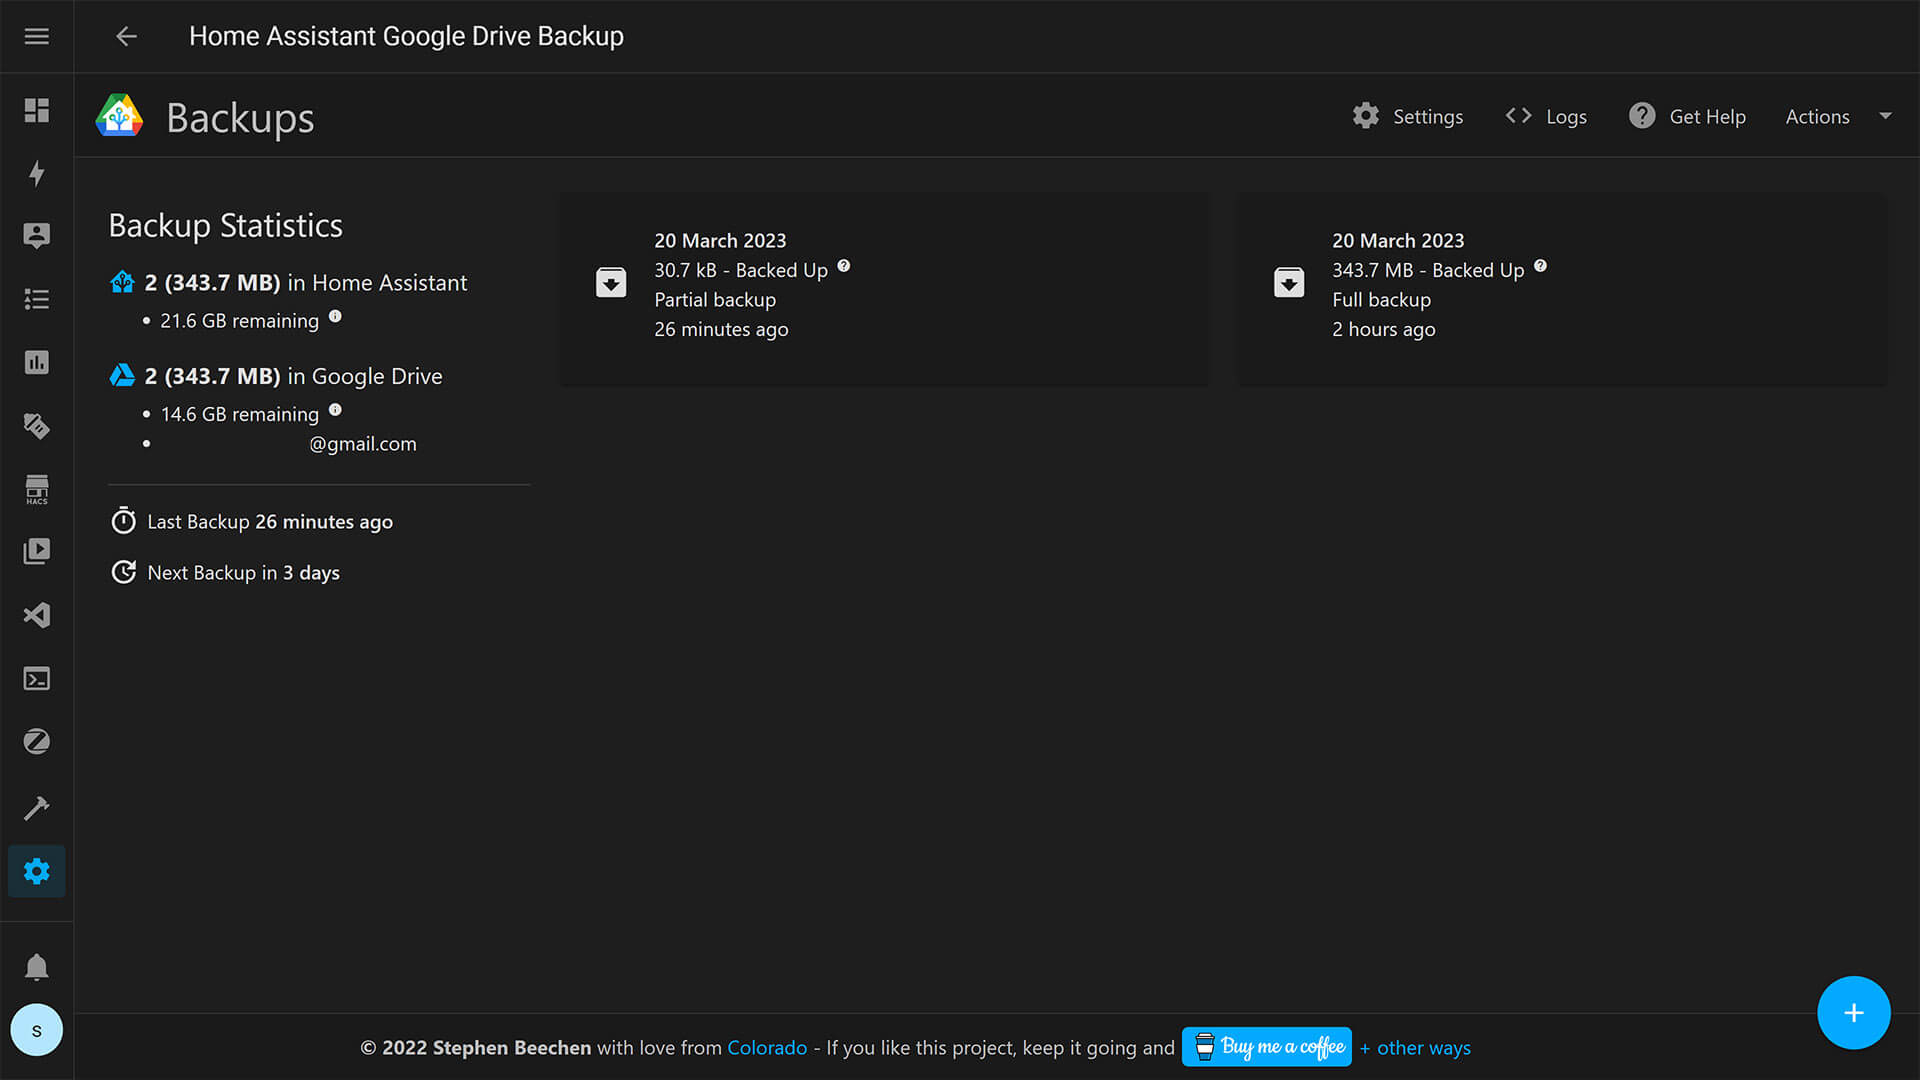 Home Assistant Google Drive Backup Add-on Backups